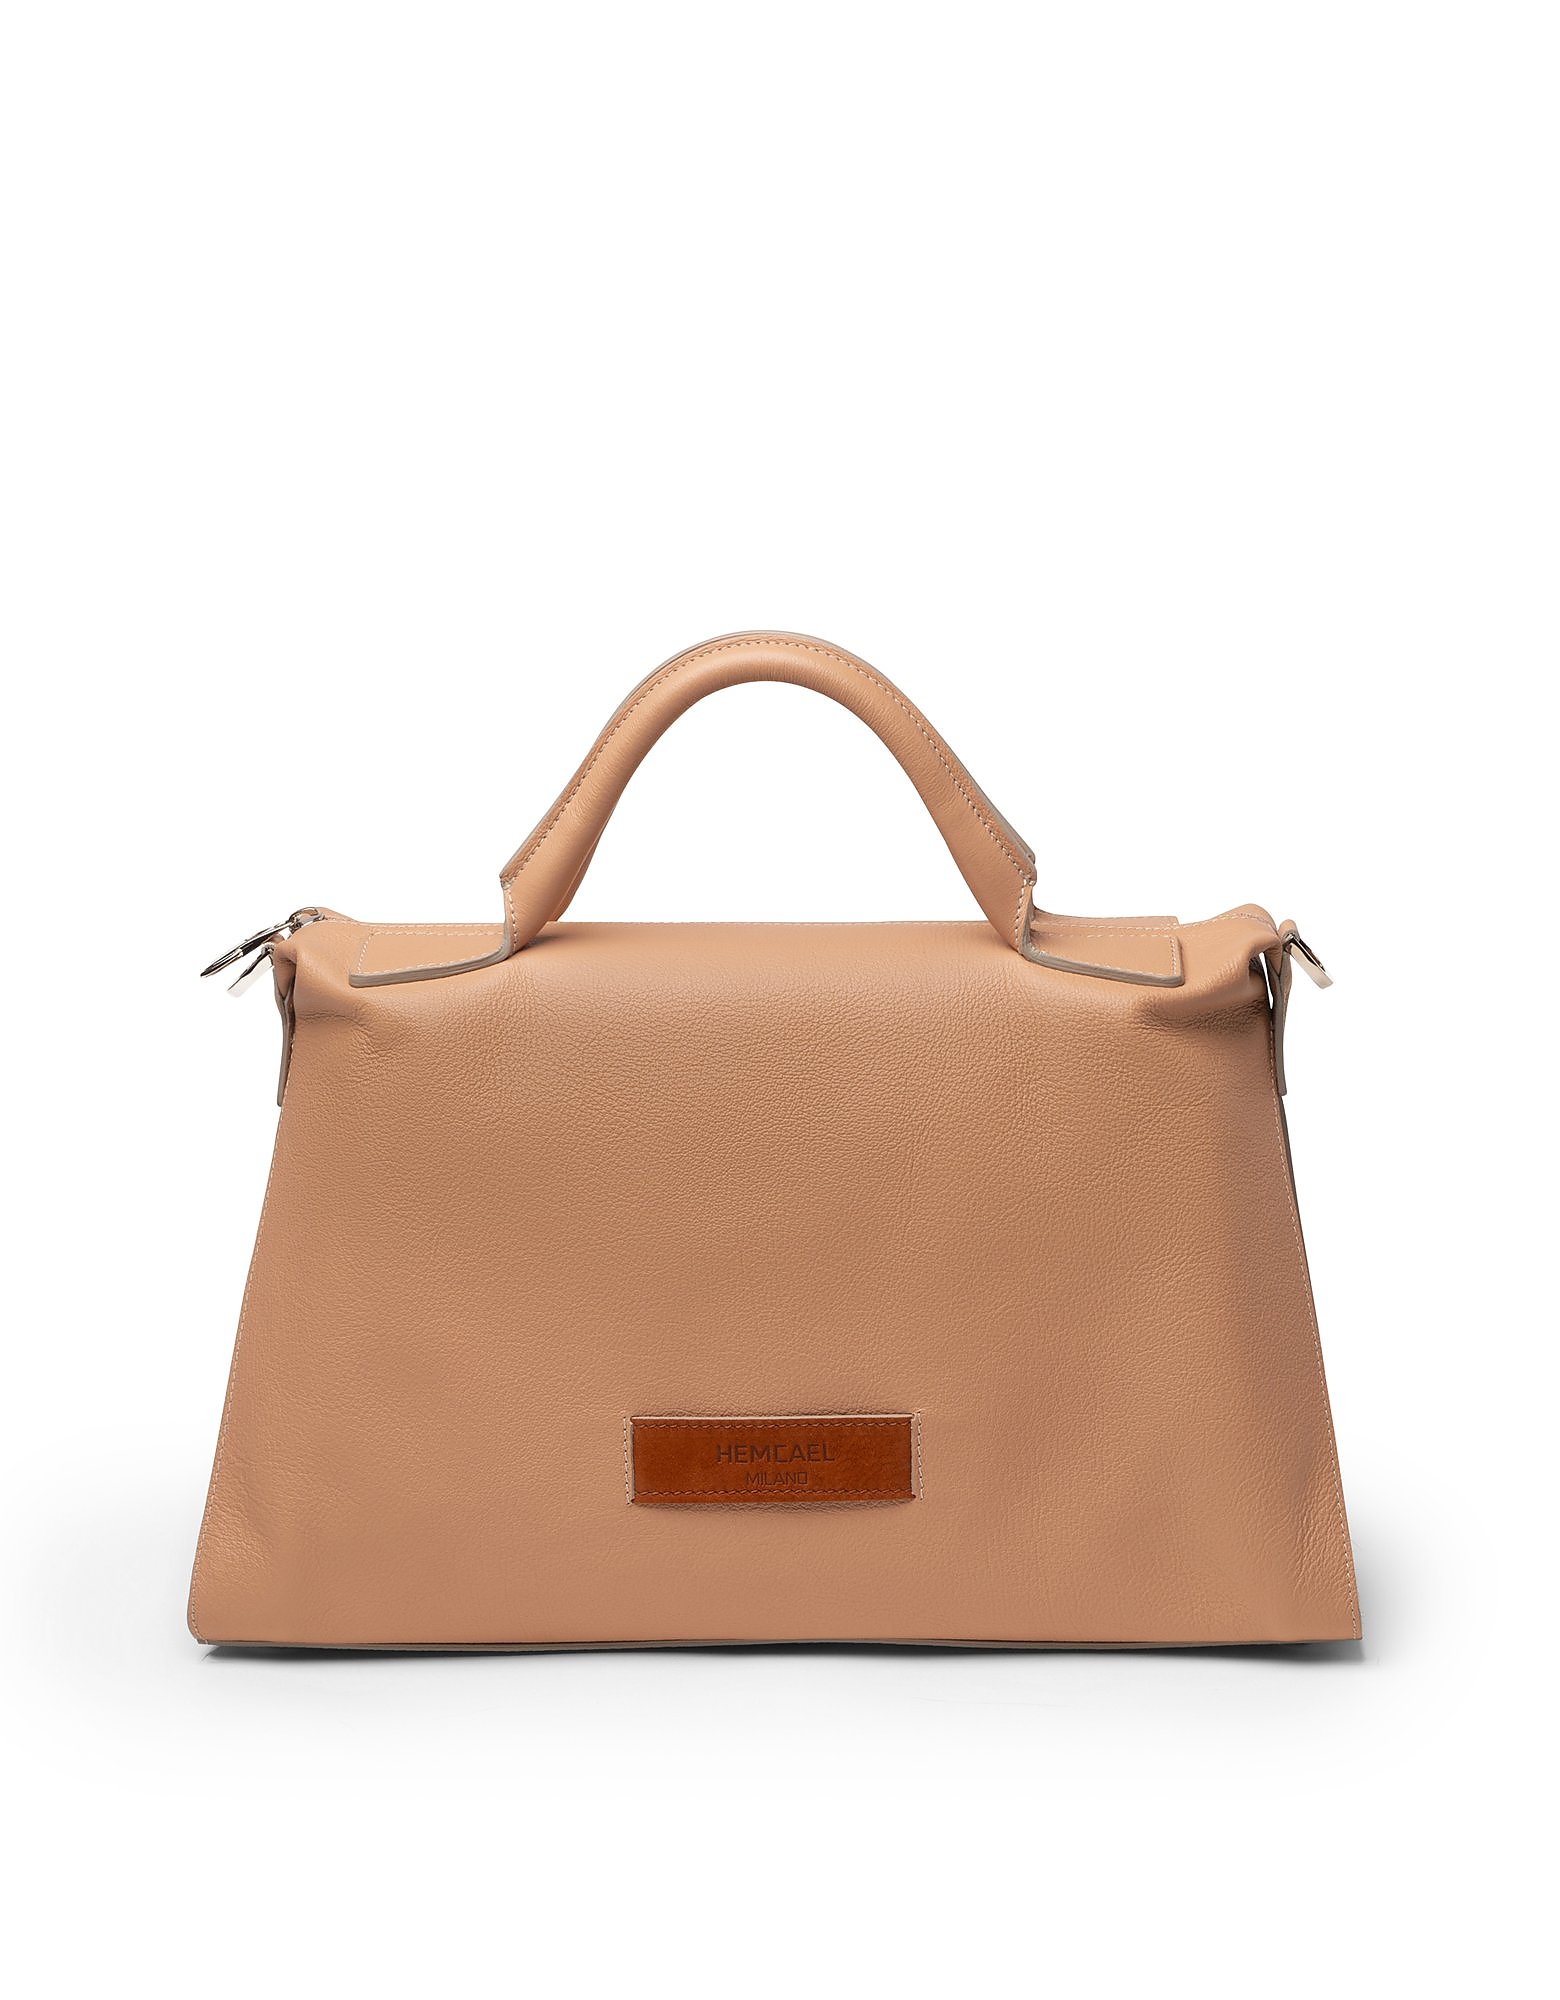 Hemcael Designer Handbags Dora Leather Top Handle Bag In Blush